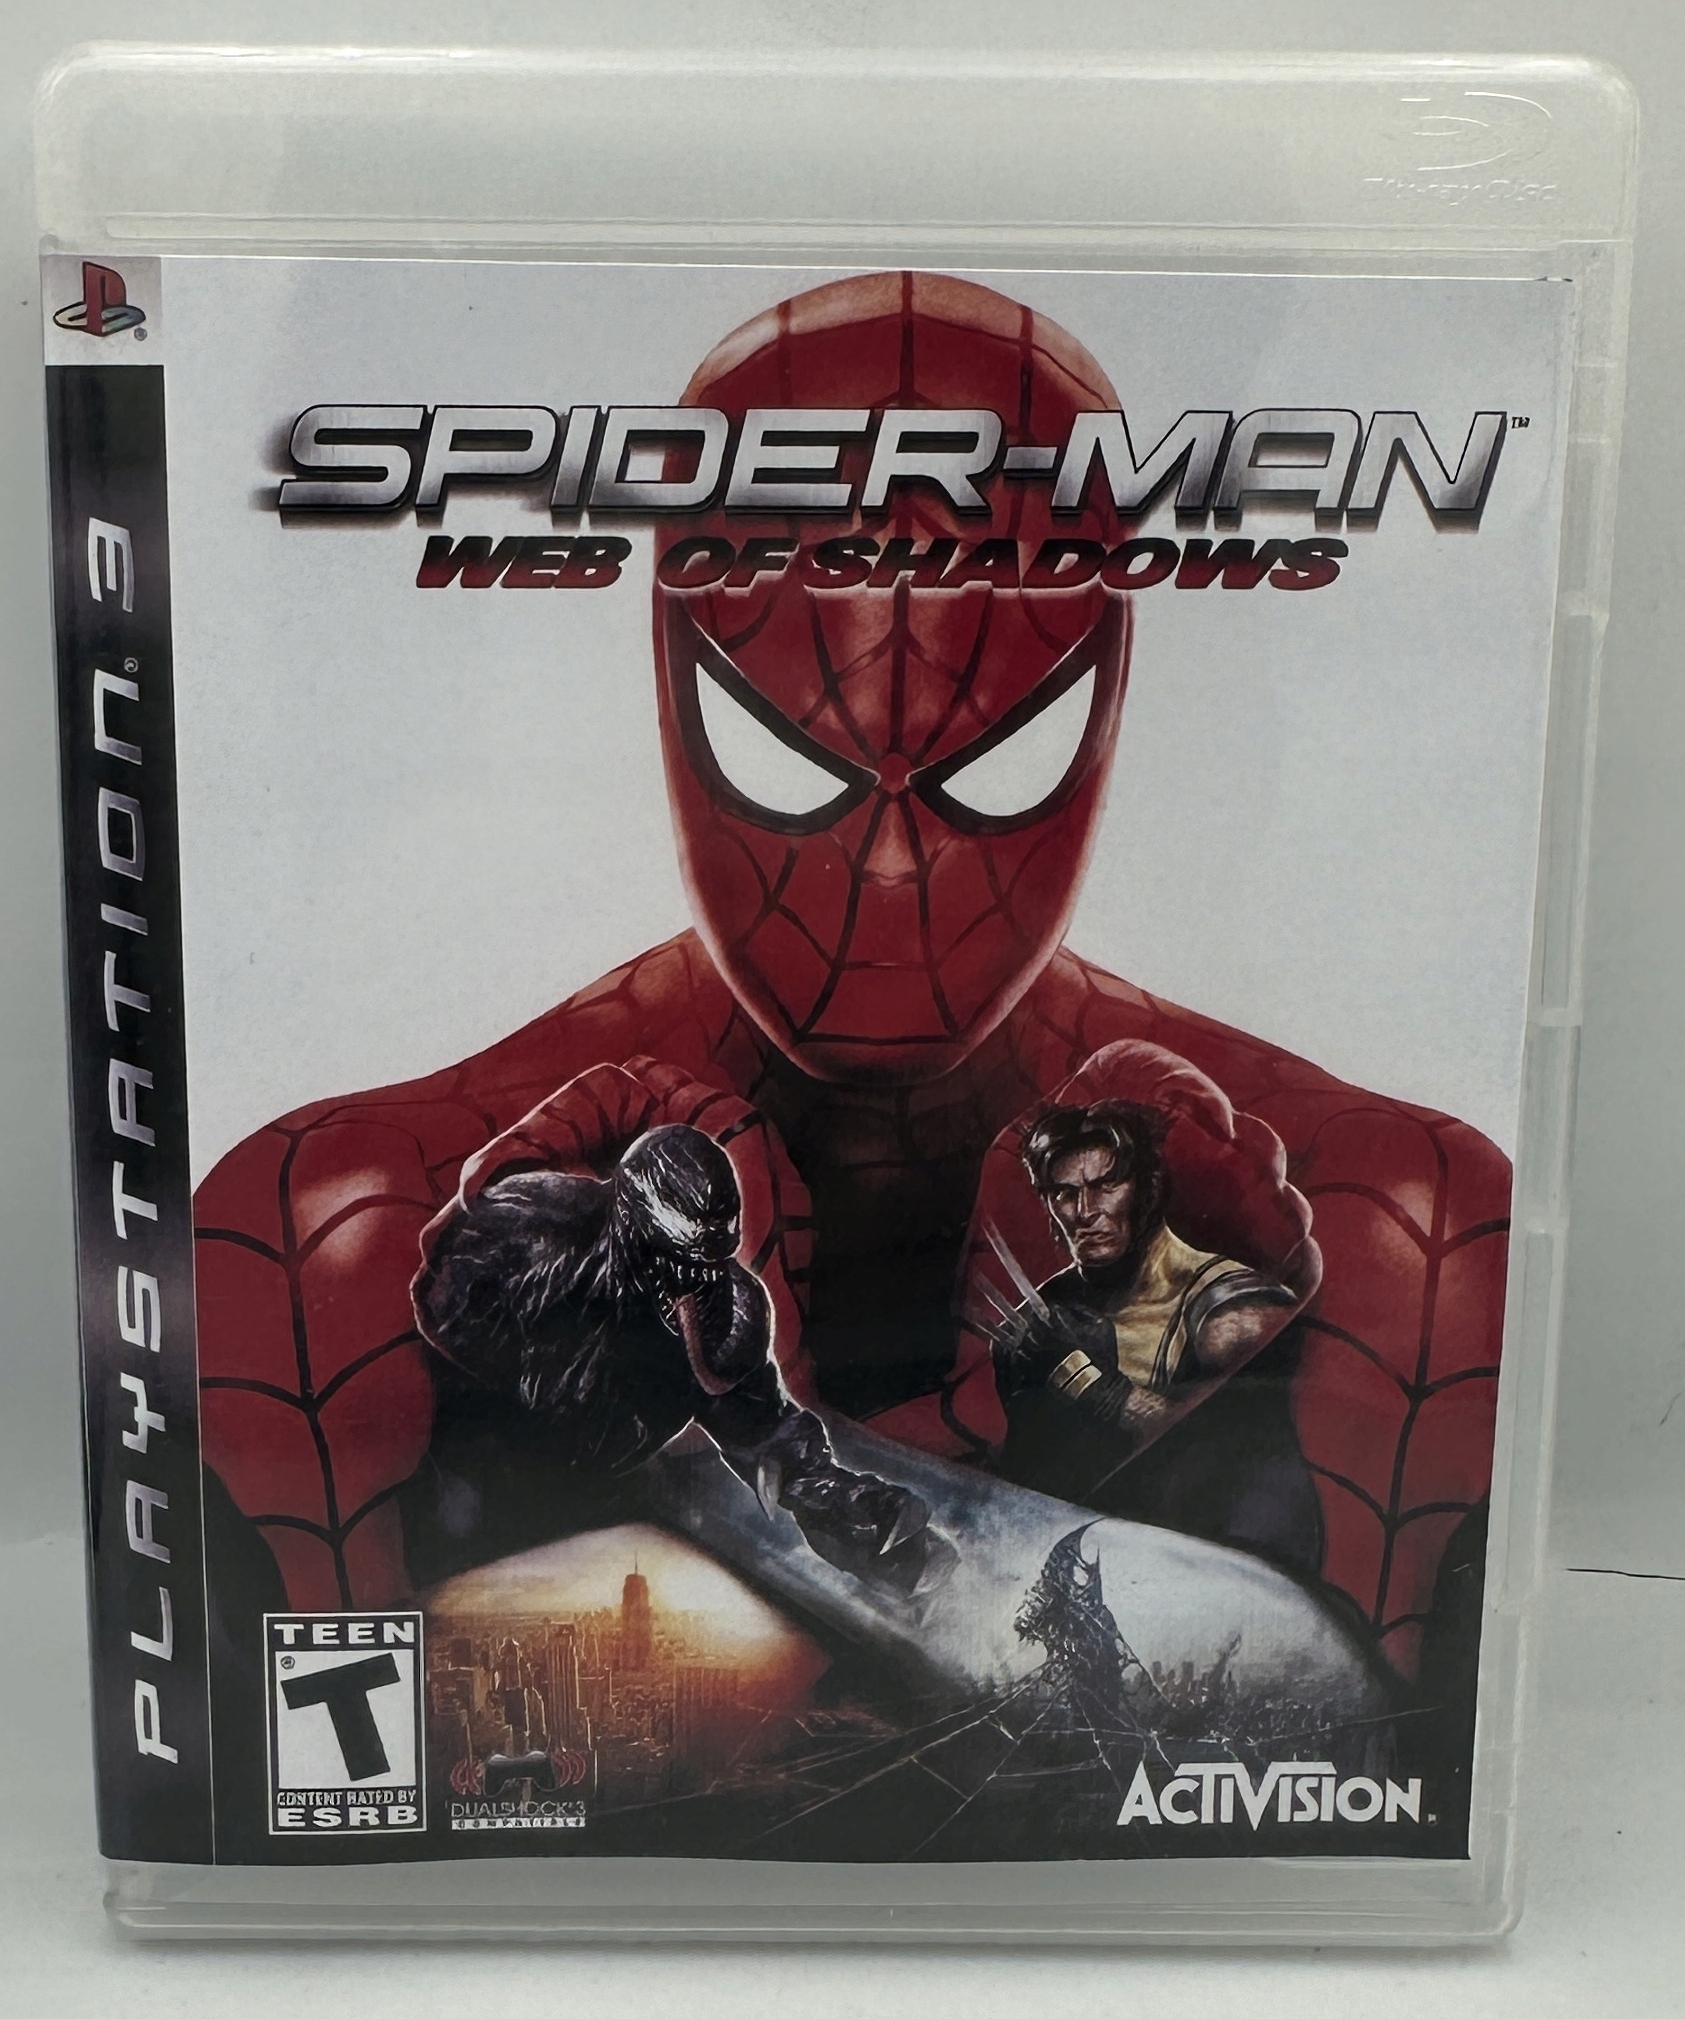 Hra Spider-Man: Web of Shadows pre PS3 Playstation 3